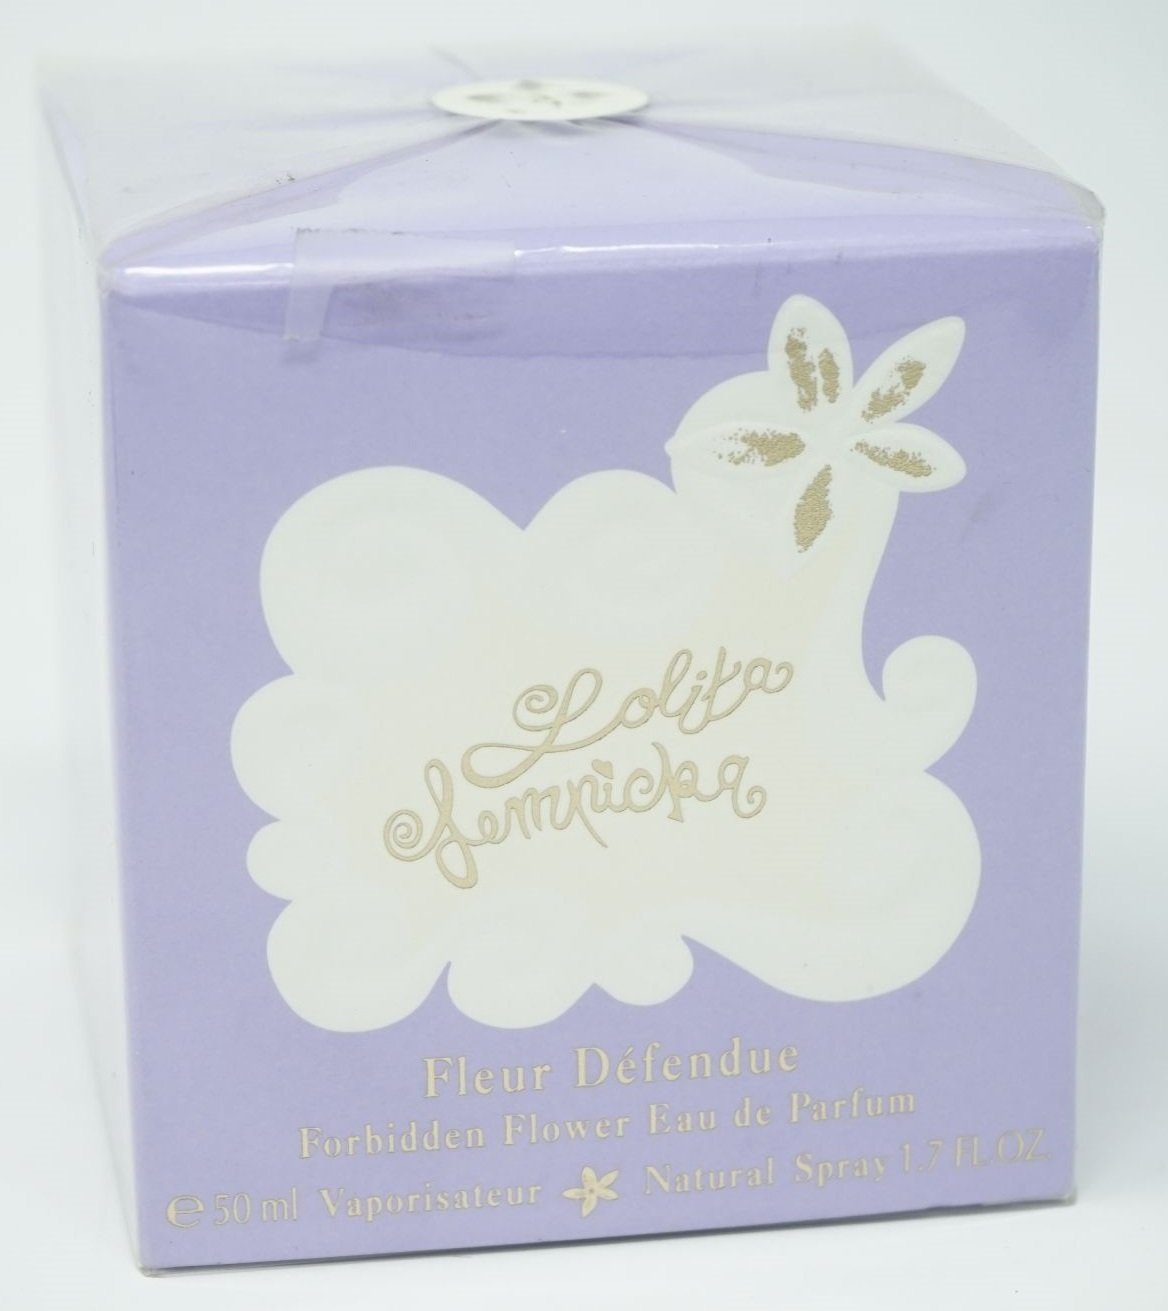 Lolita Lempicka Eau Eau Lolita 50 ml Parfum de Lempicka Fleur Spray Parfum Defendue de